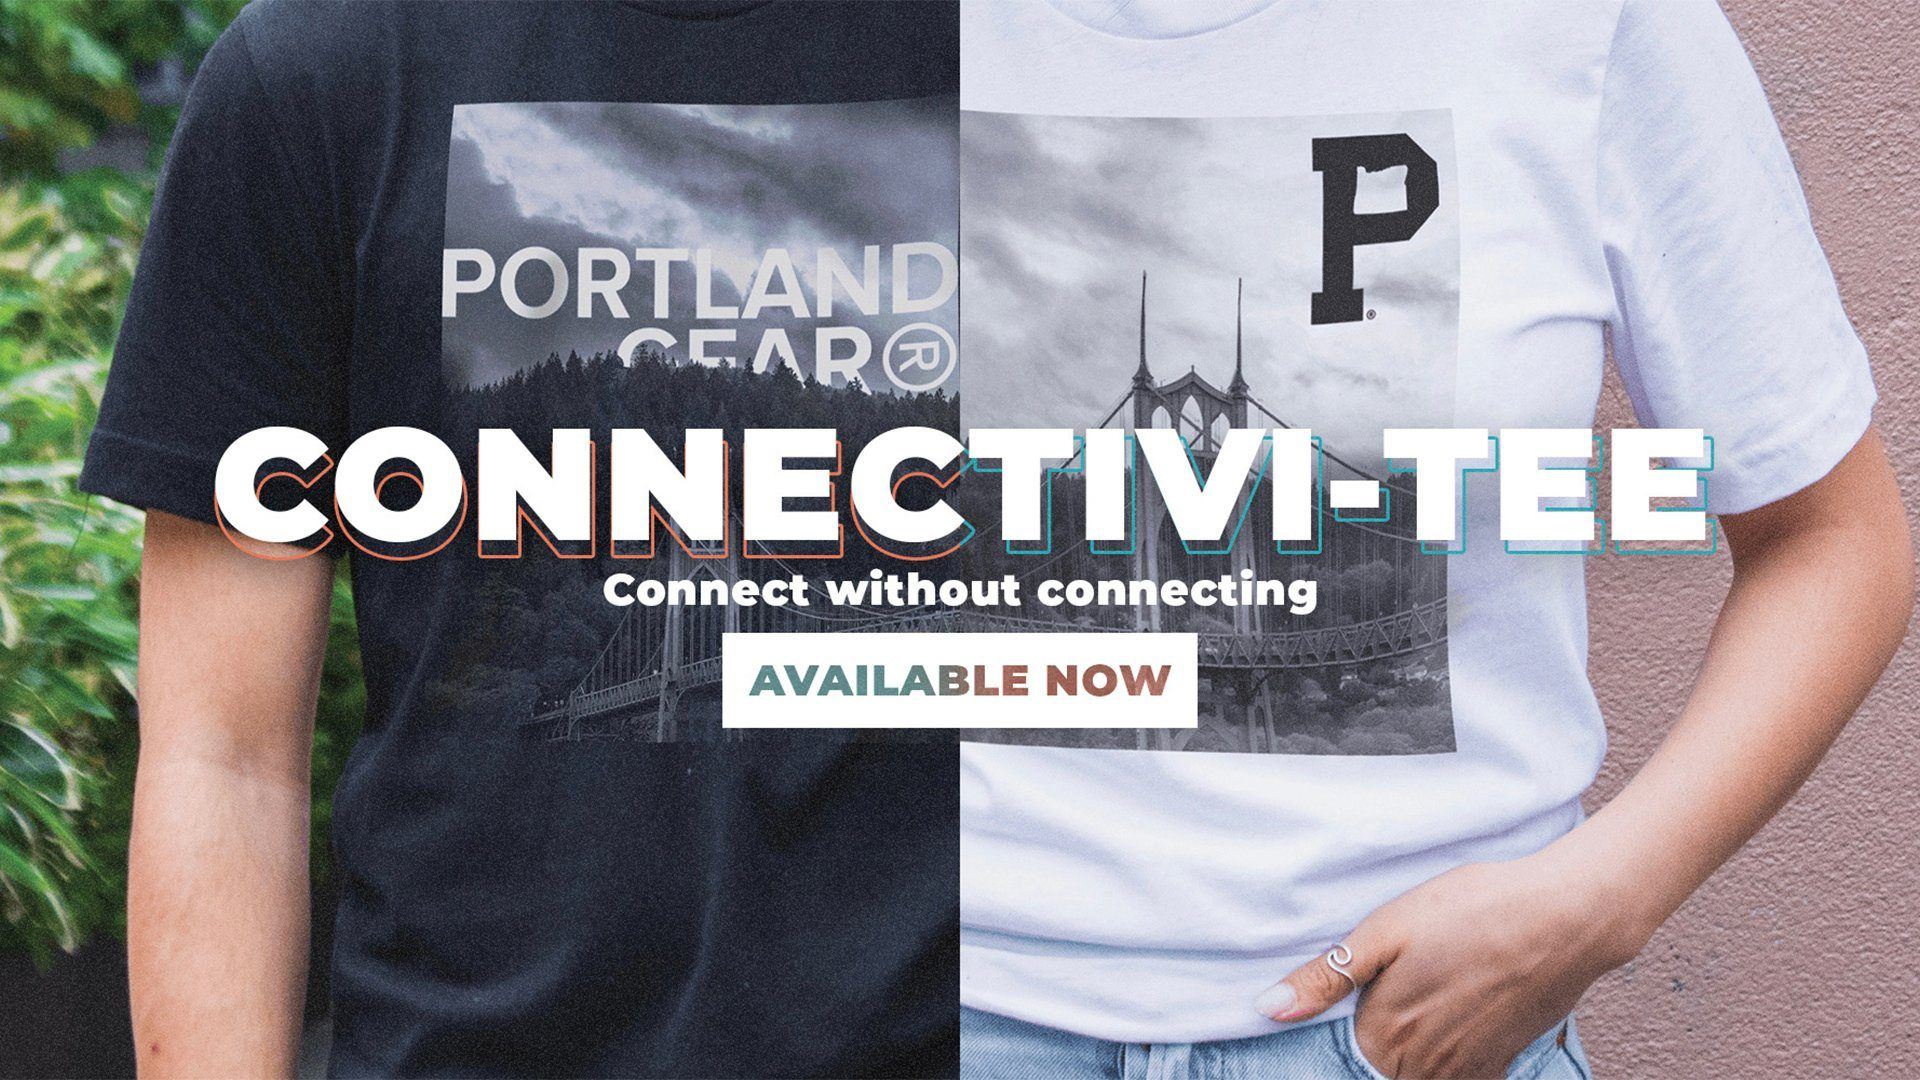 The Connectivi-Tee - Portland Gear